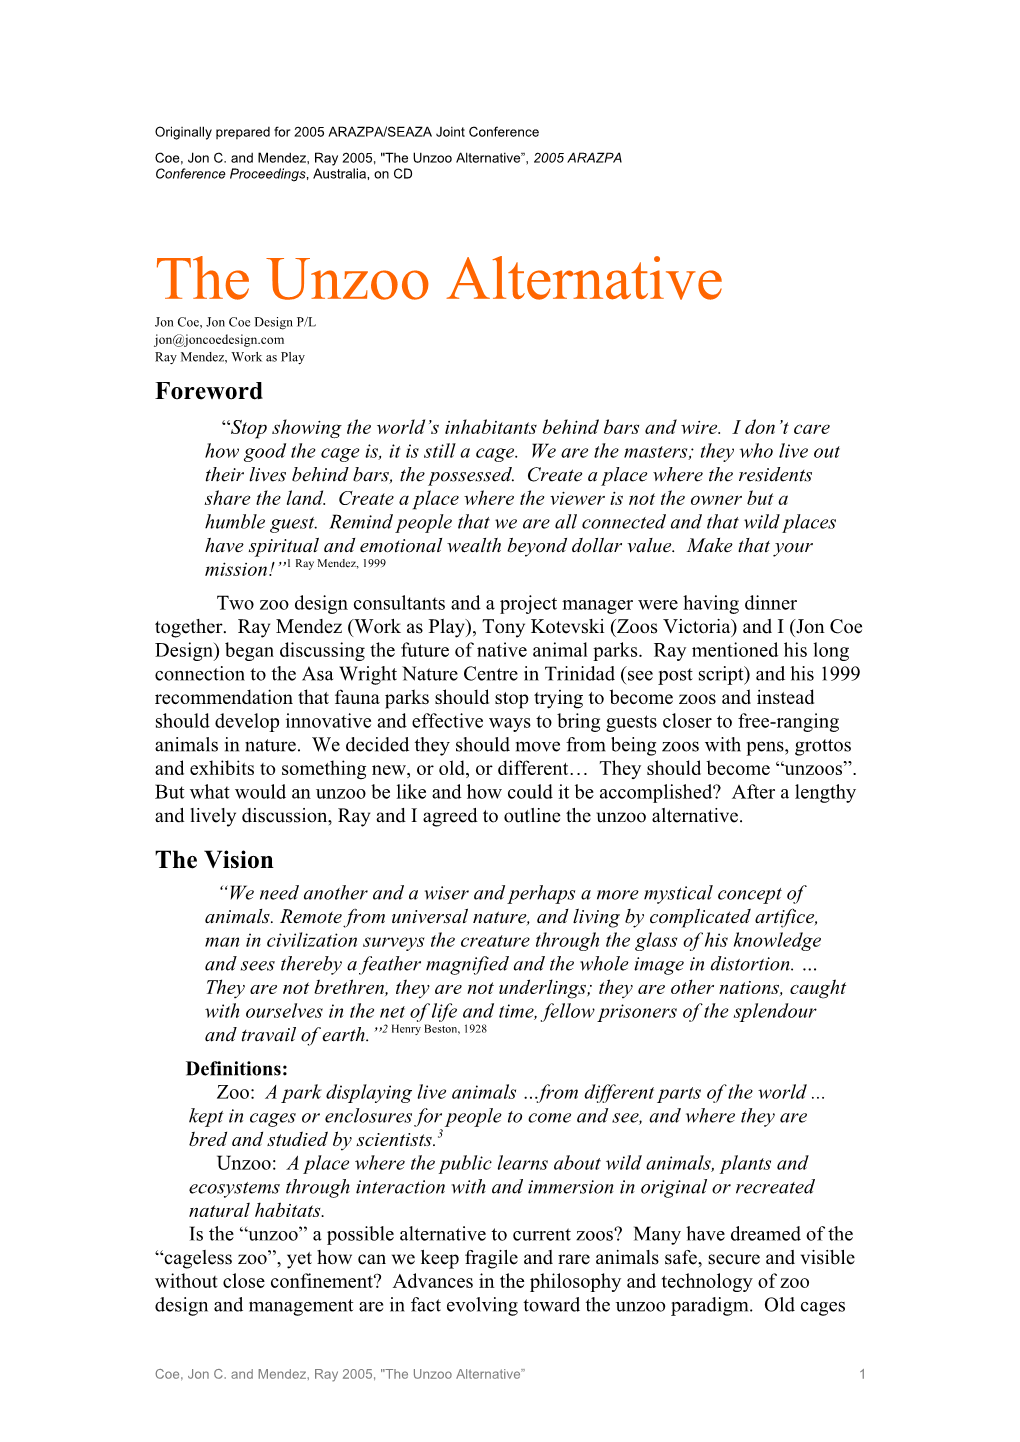 The Unzoo Alternative”, 2005 ARAZPA Conference Proceedings, Australia, on CD